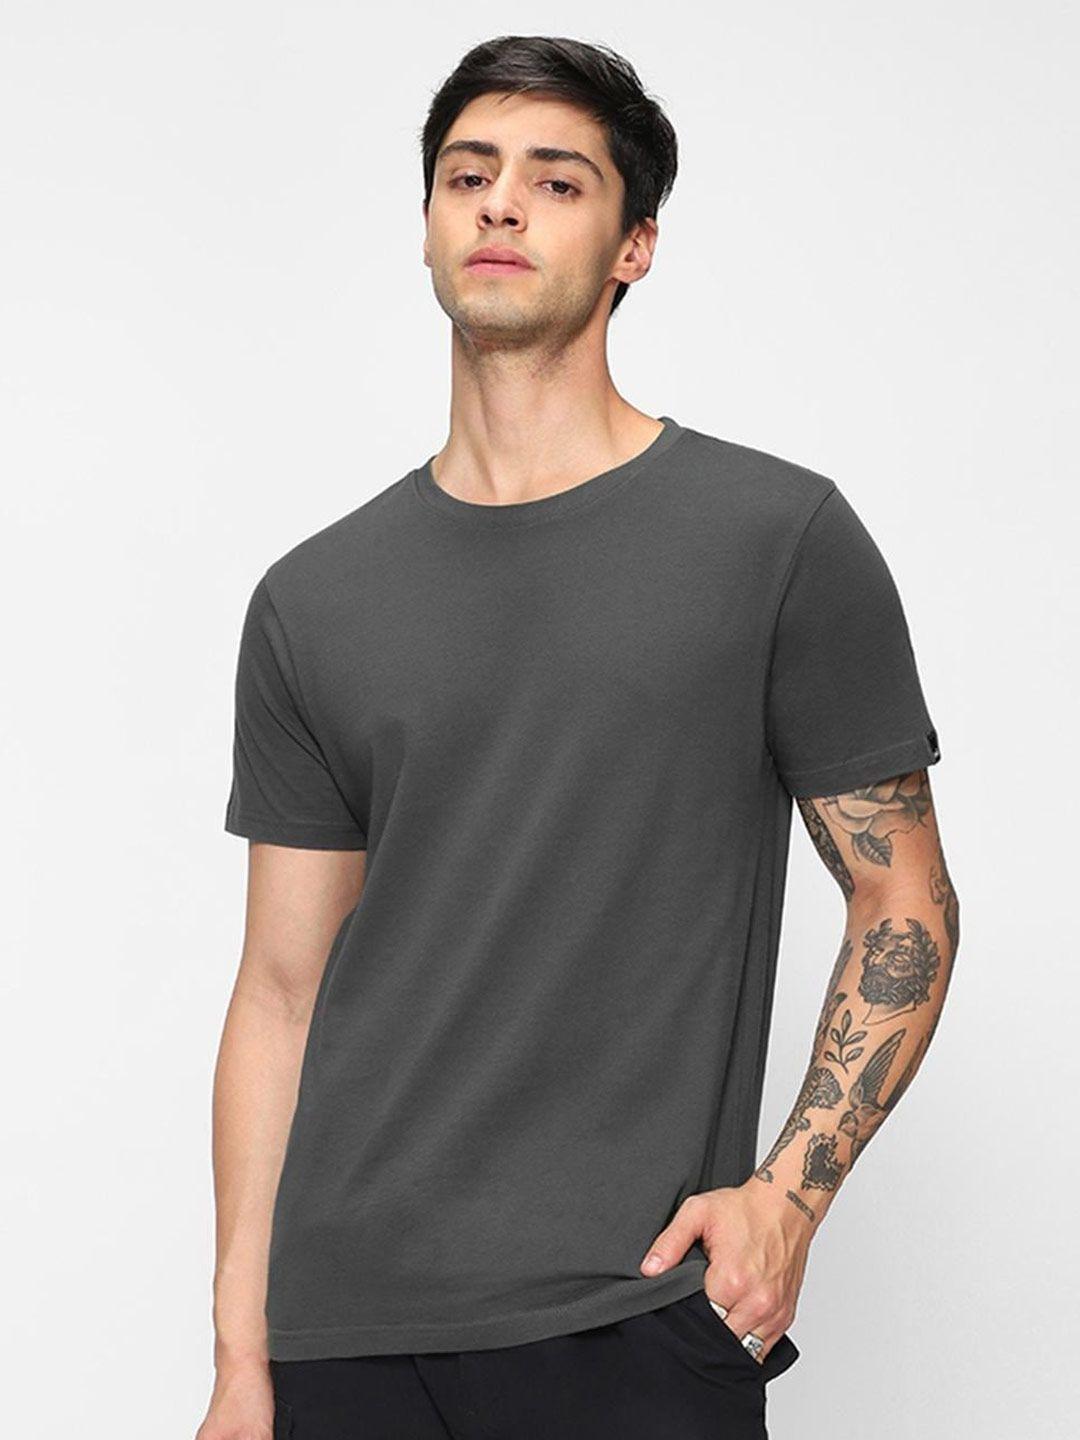 bewakoof-round-neck-regular-fit-t-shirt